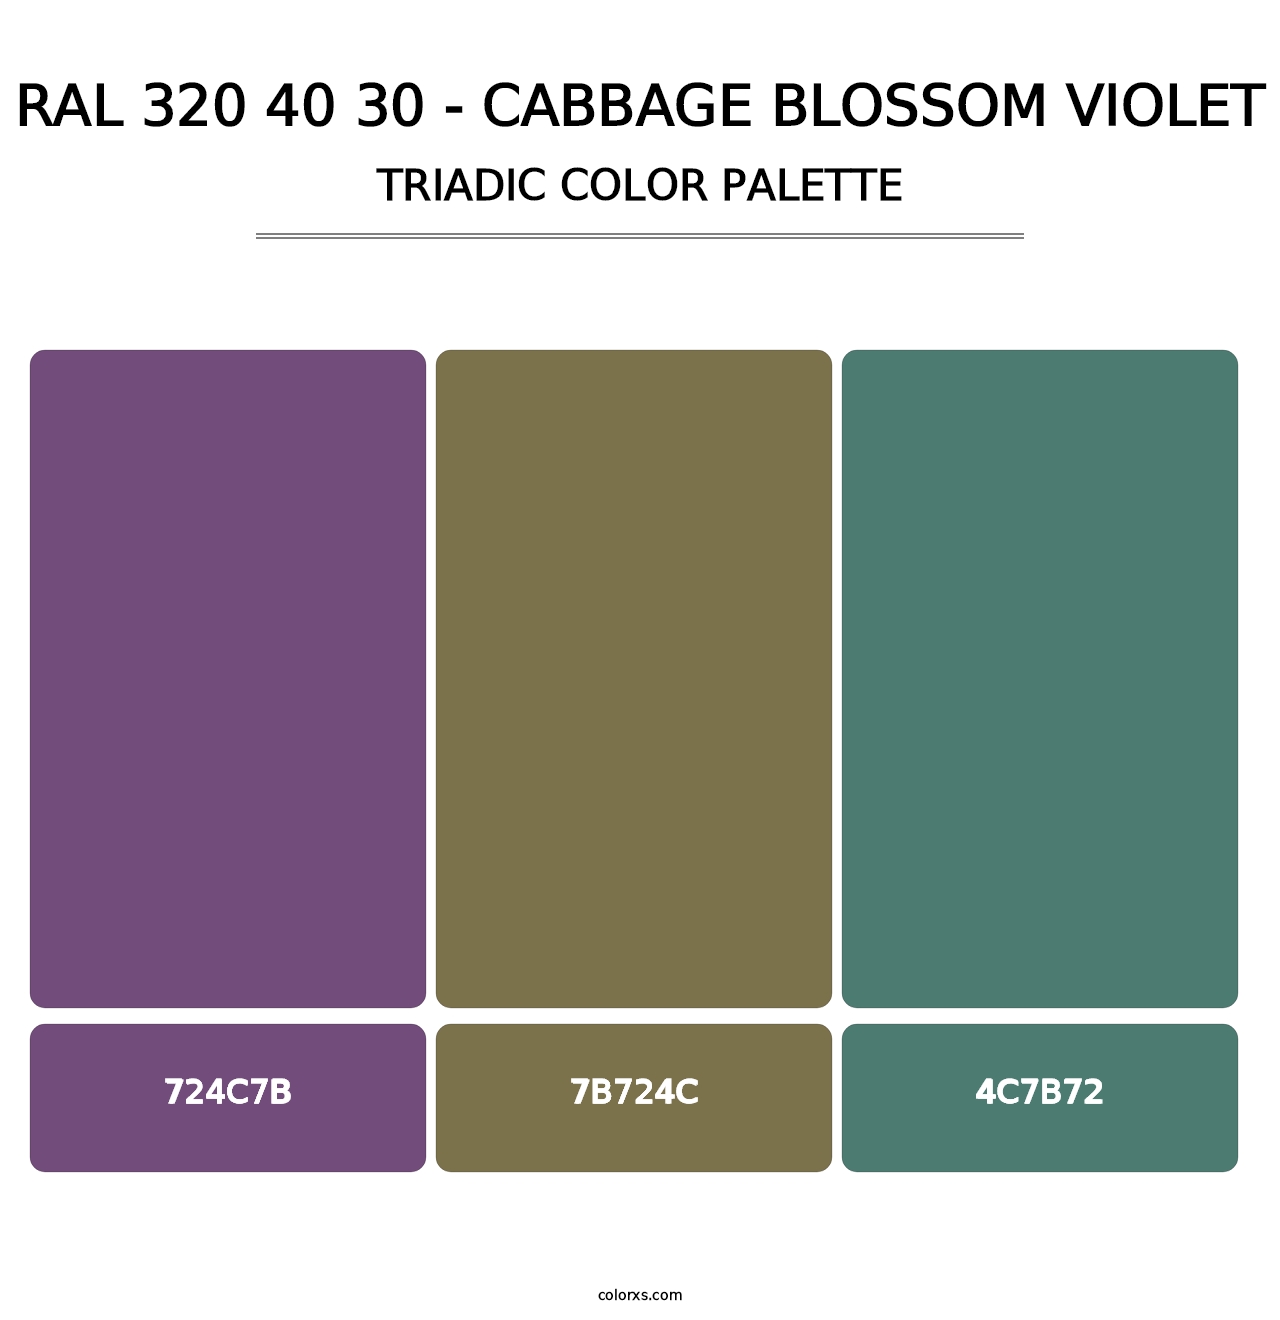 RAL 320 40 30 - Cabbage Blossom Violet - Triadic Color Palette